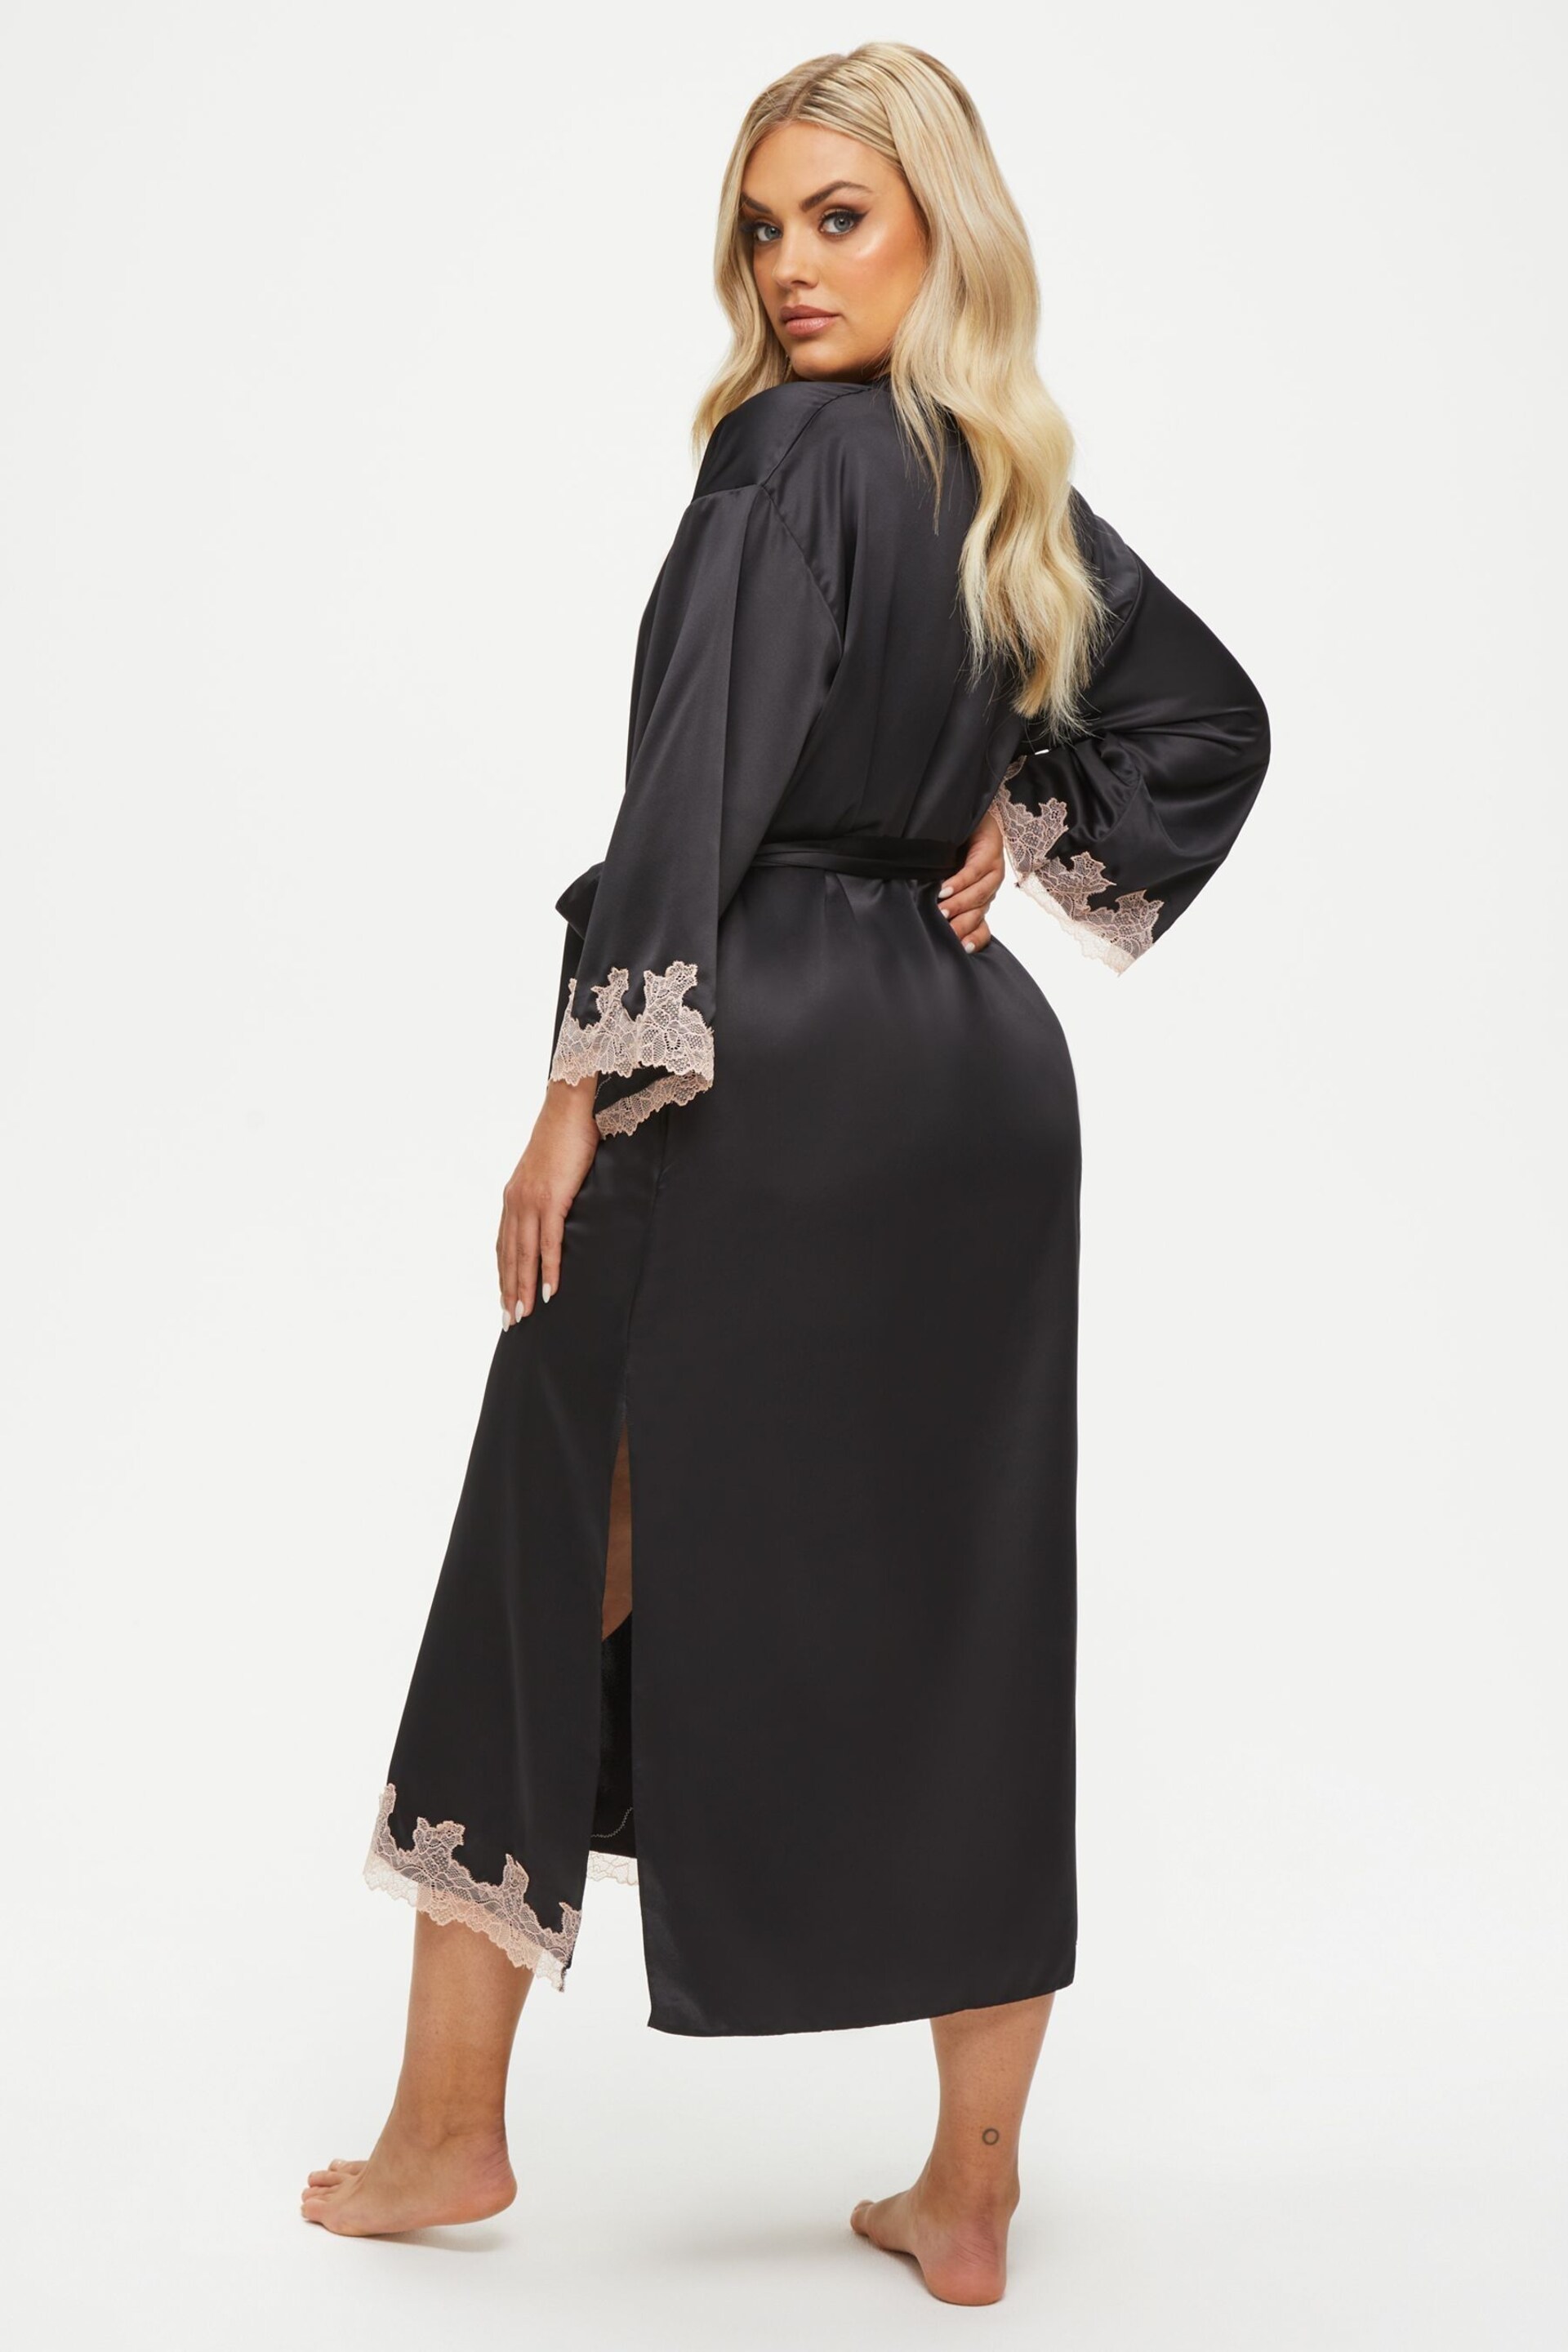 Ann Summers Black Satin Sorella Maxi Robe Dressing Gown - Image 3 of 5